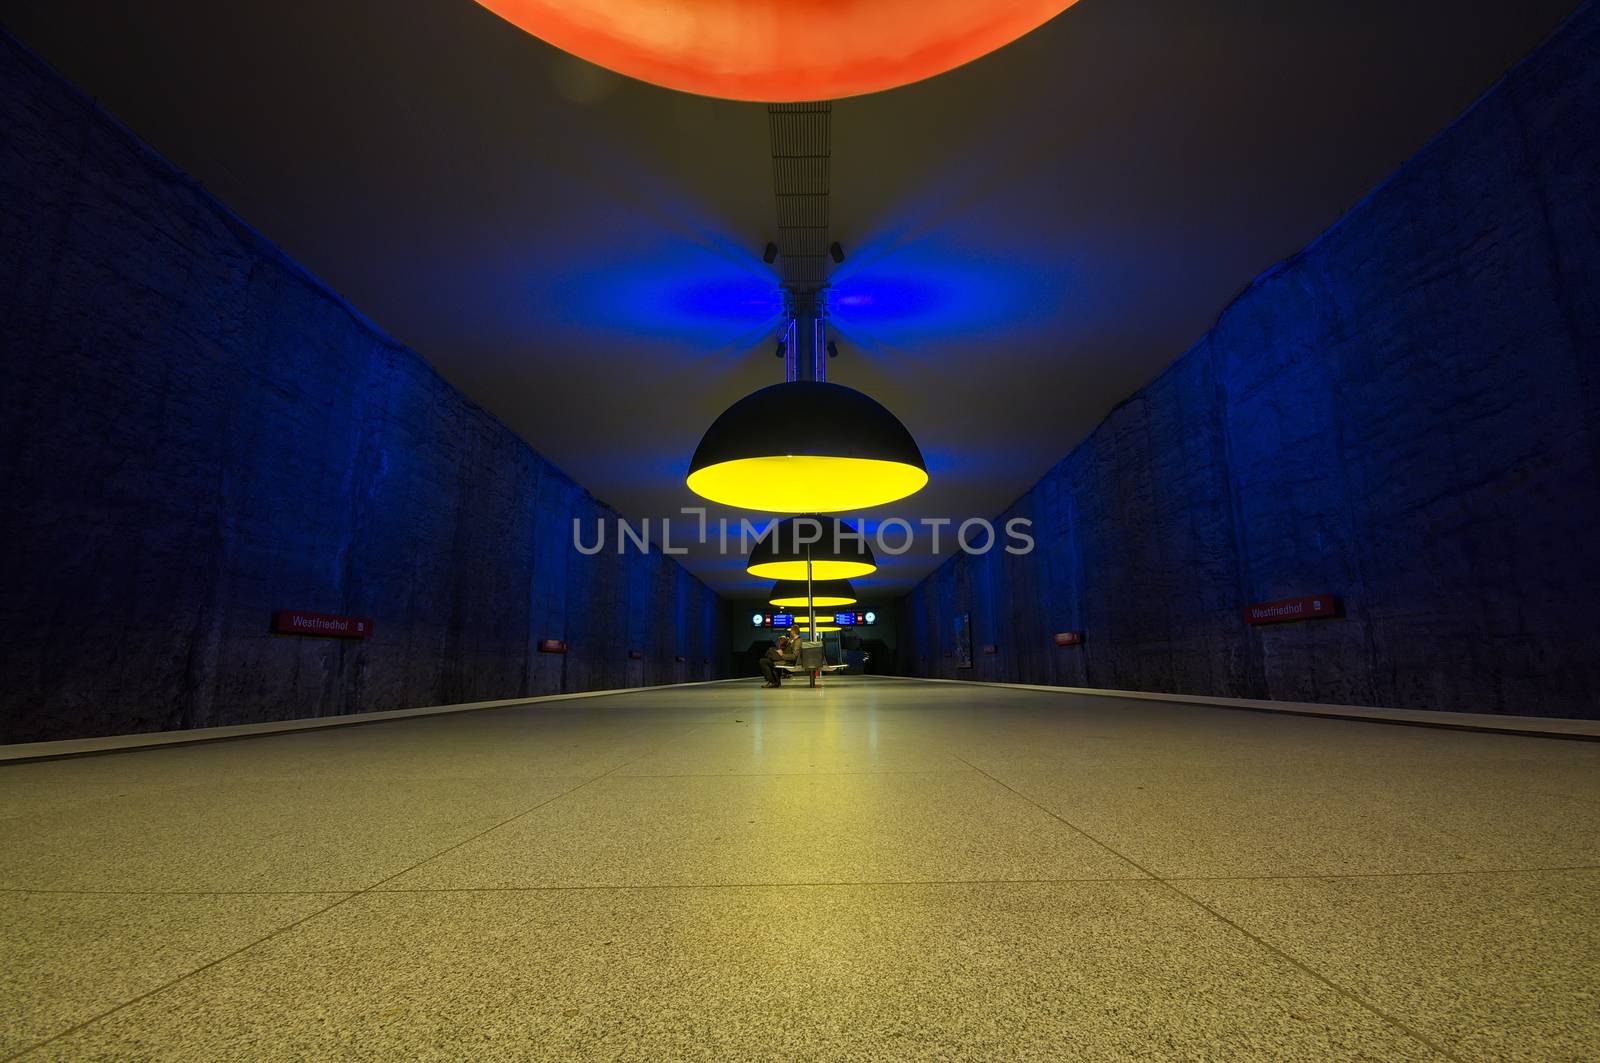 Westfriedhof subway station in Munich, Germany